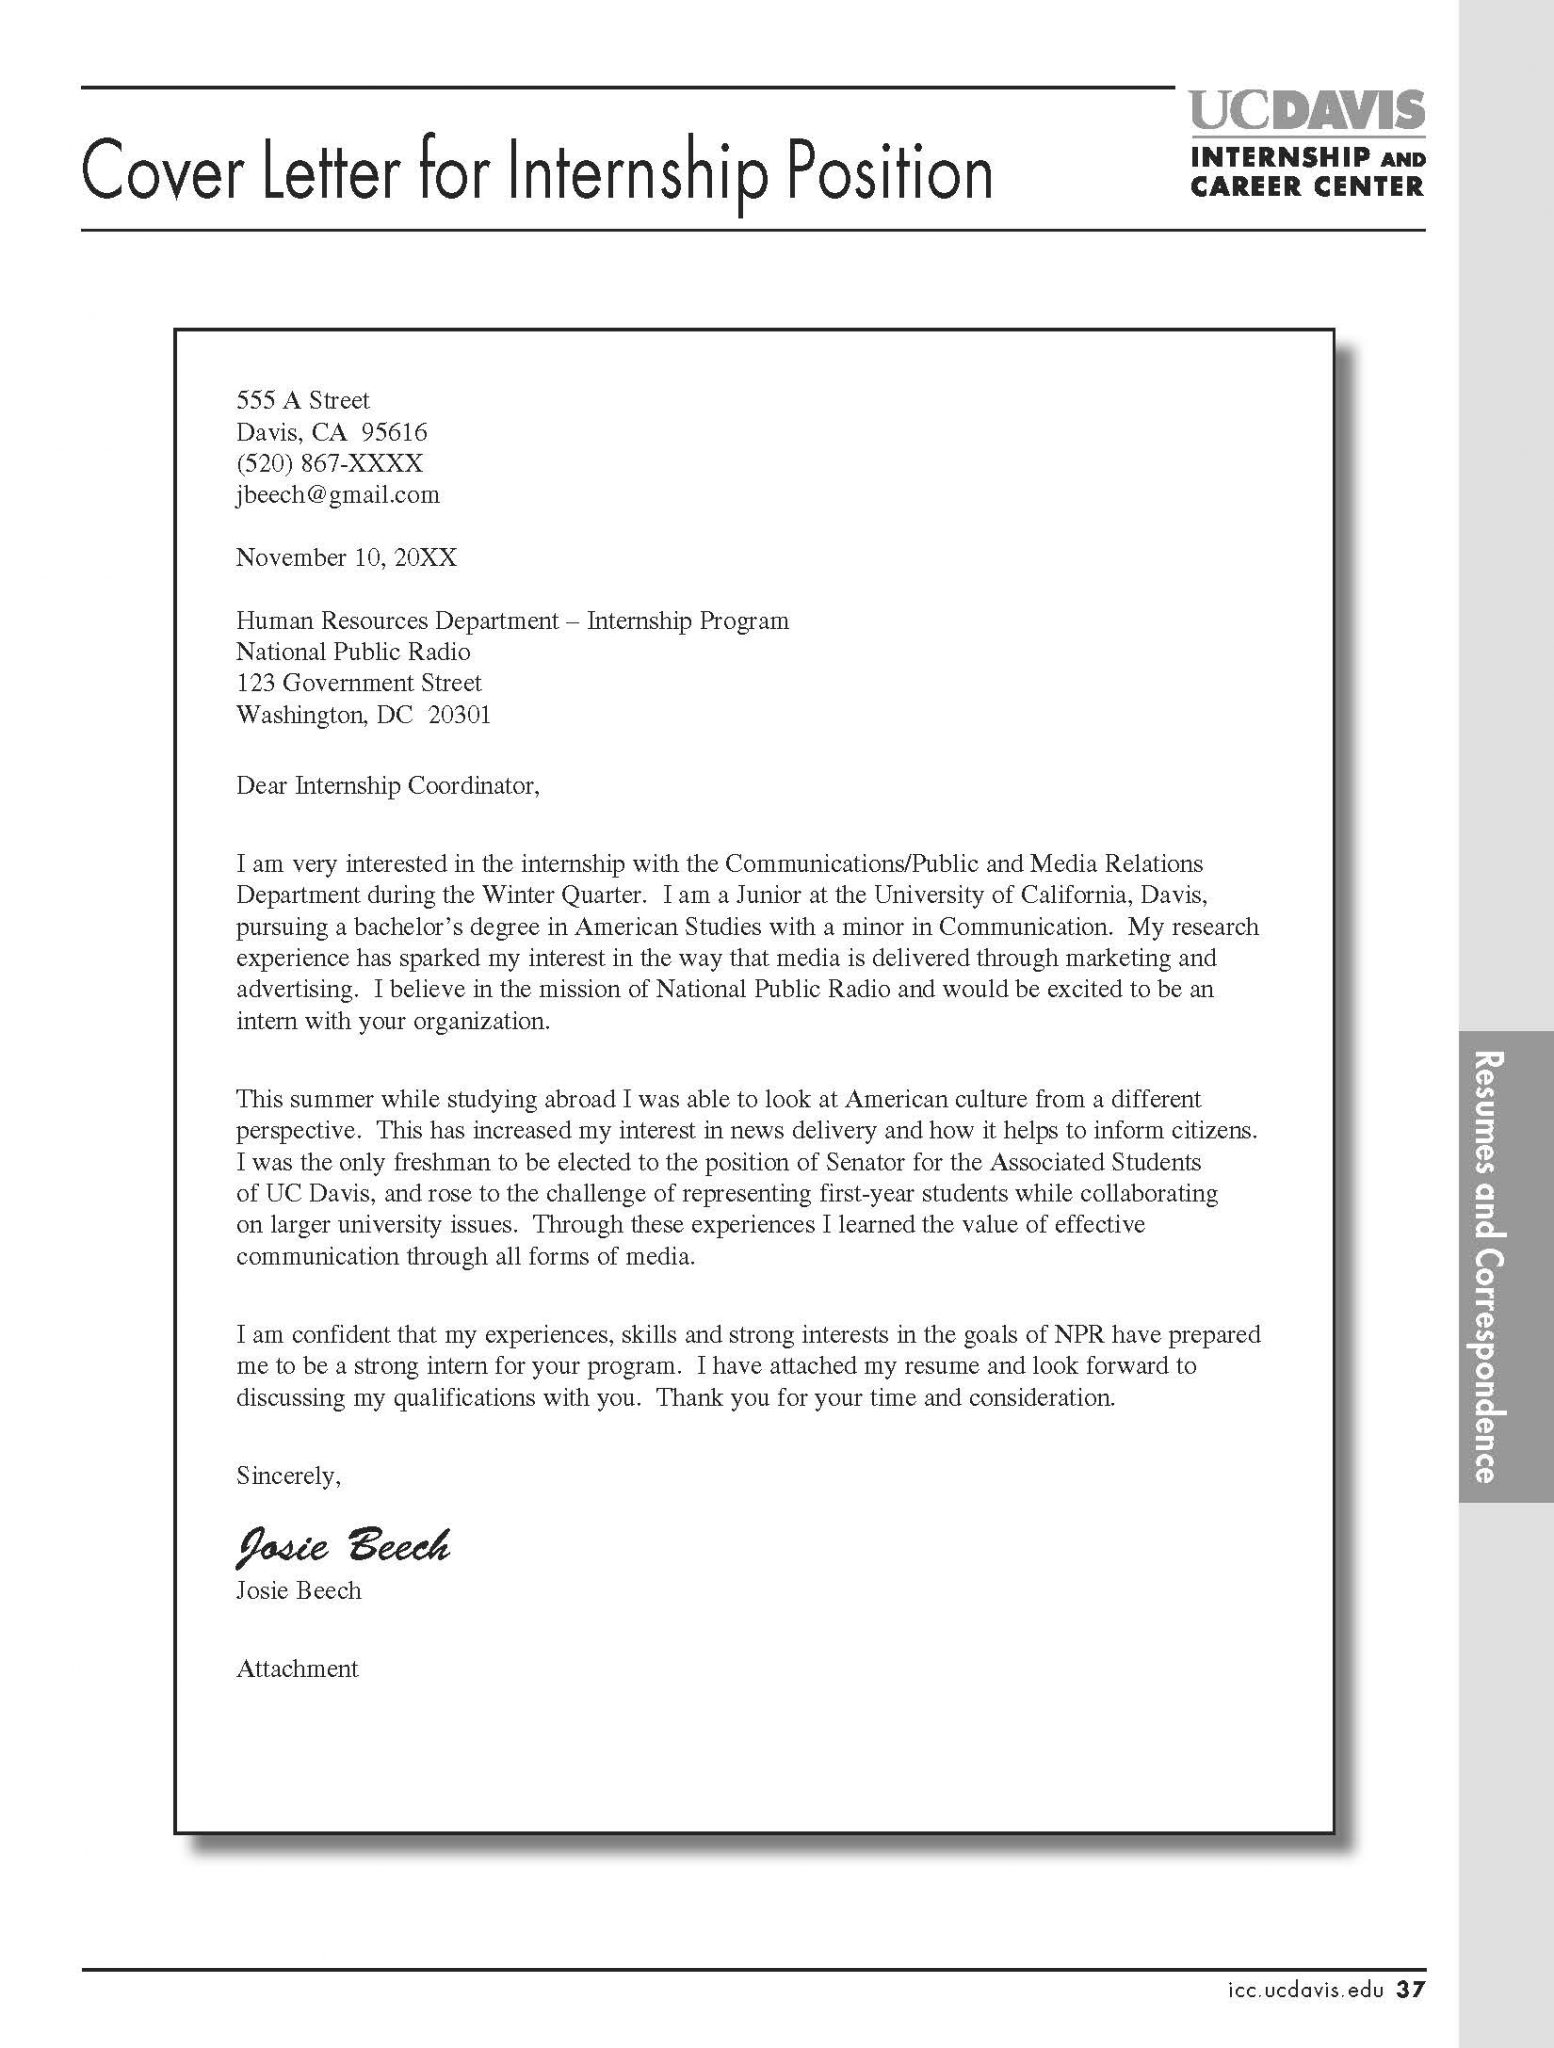 Internship Offer Letter Sample from content.wisestep.com